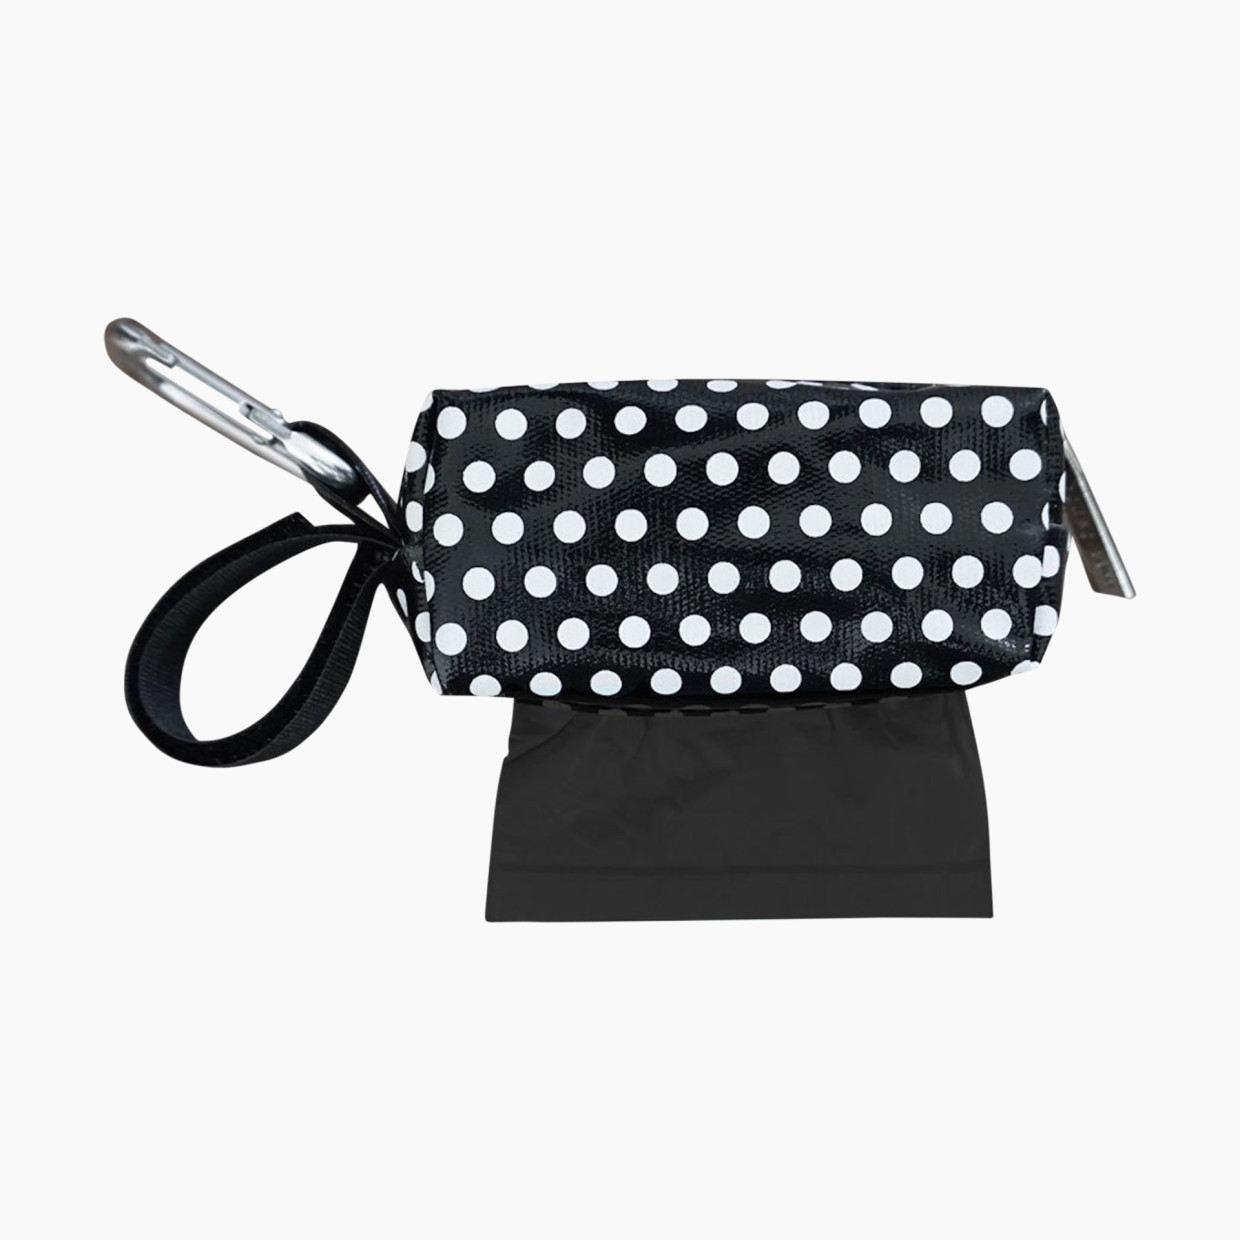 Oh Baby Bags Portable Diaper Bag Dispenser - Black/White Dots, 48.